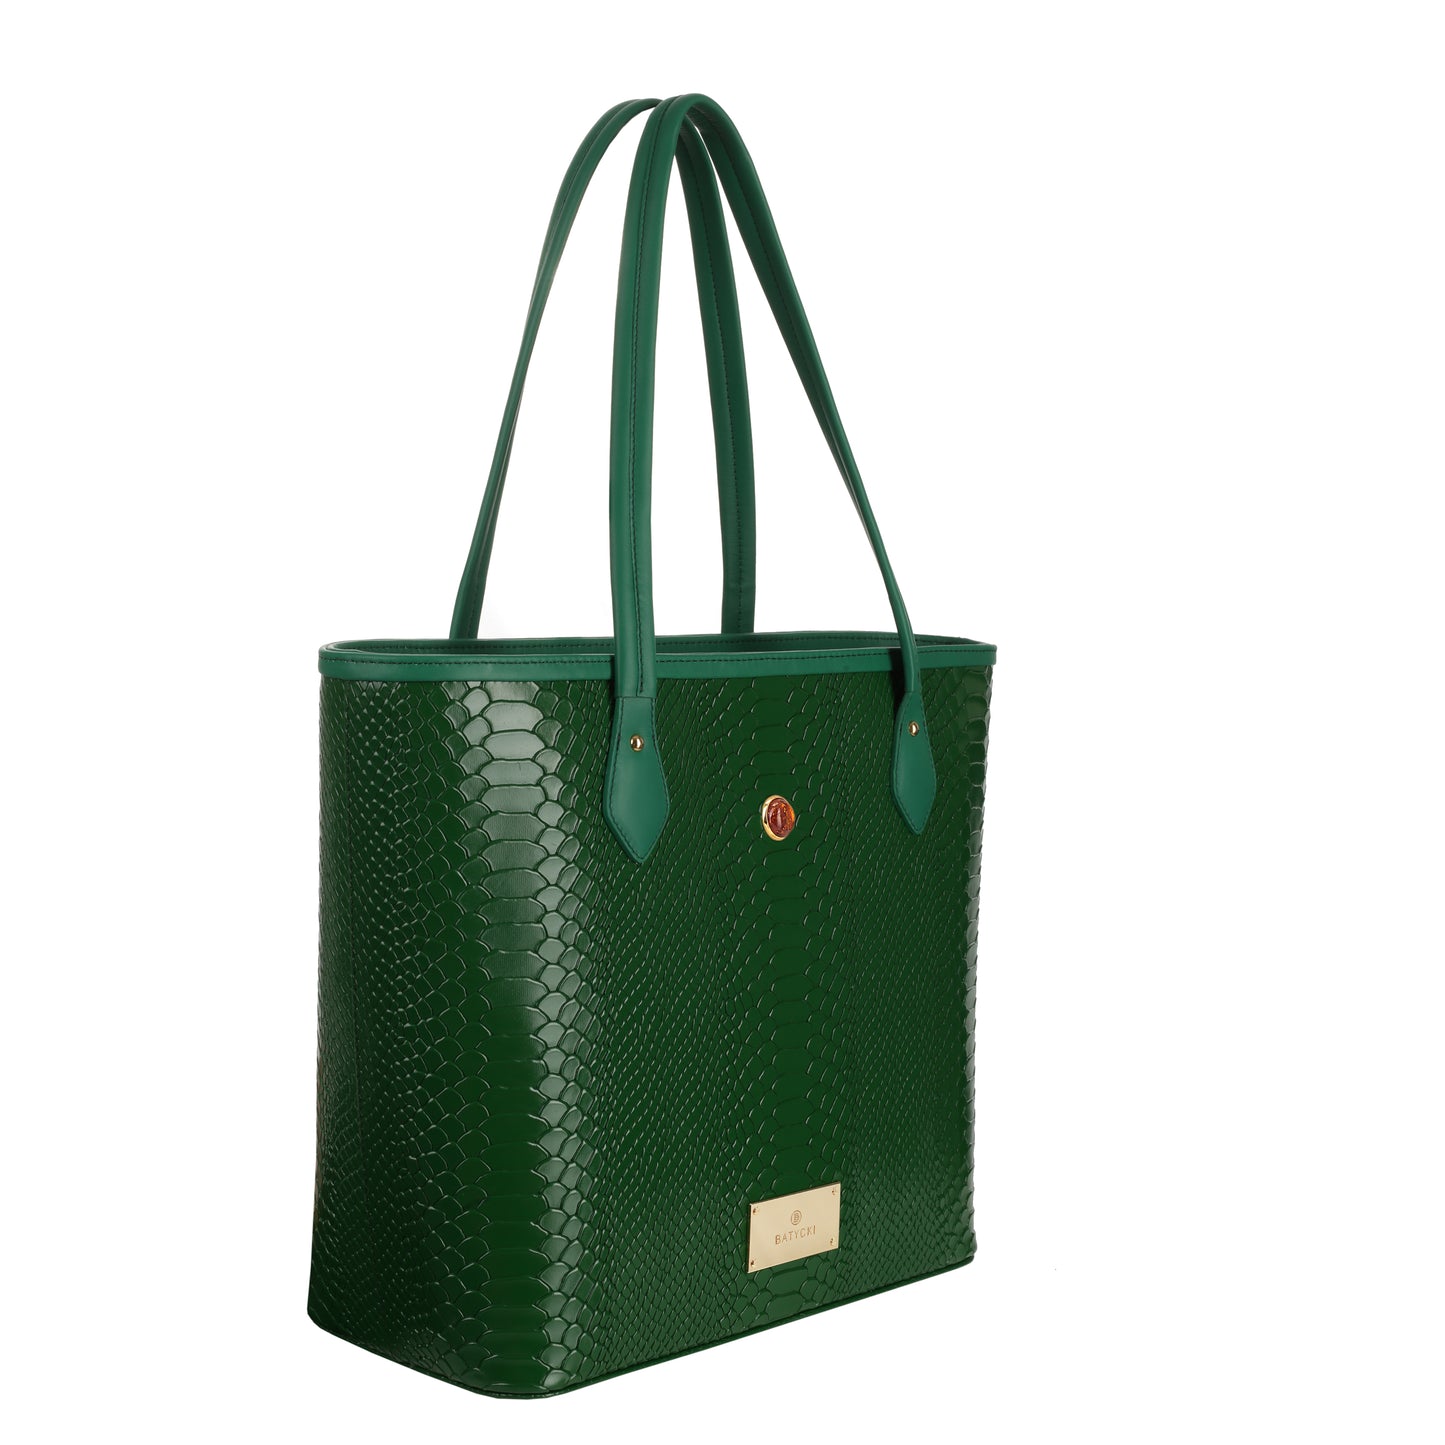 GINA GREEN women's leather handbag